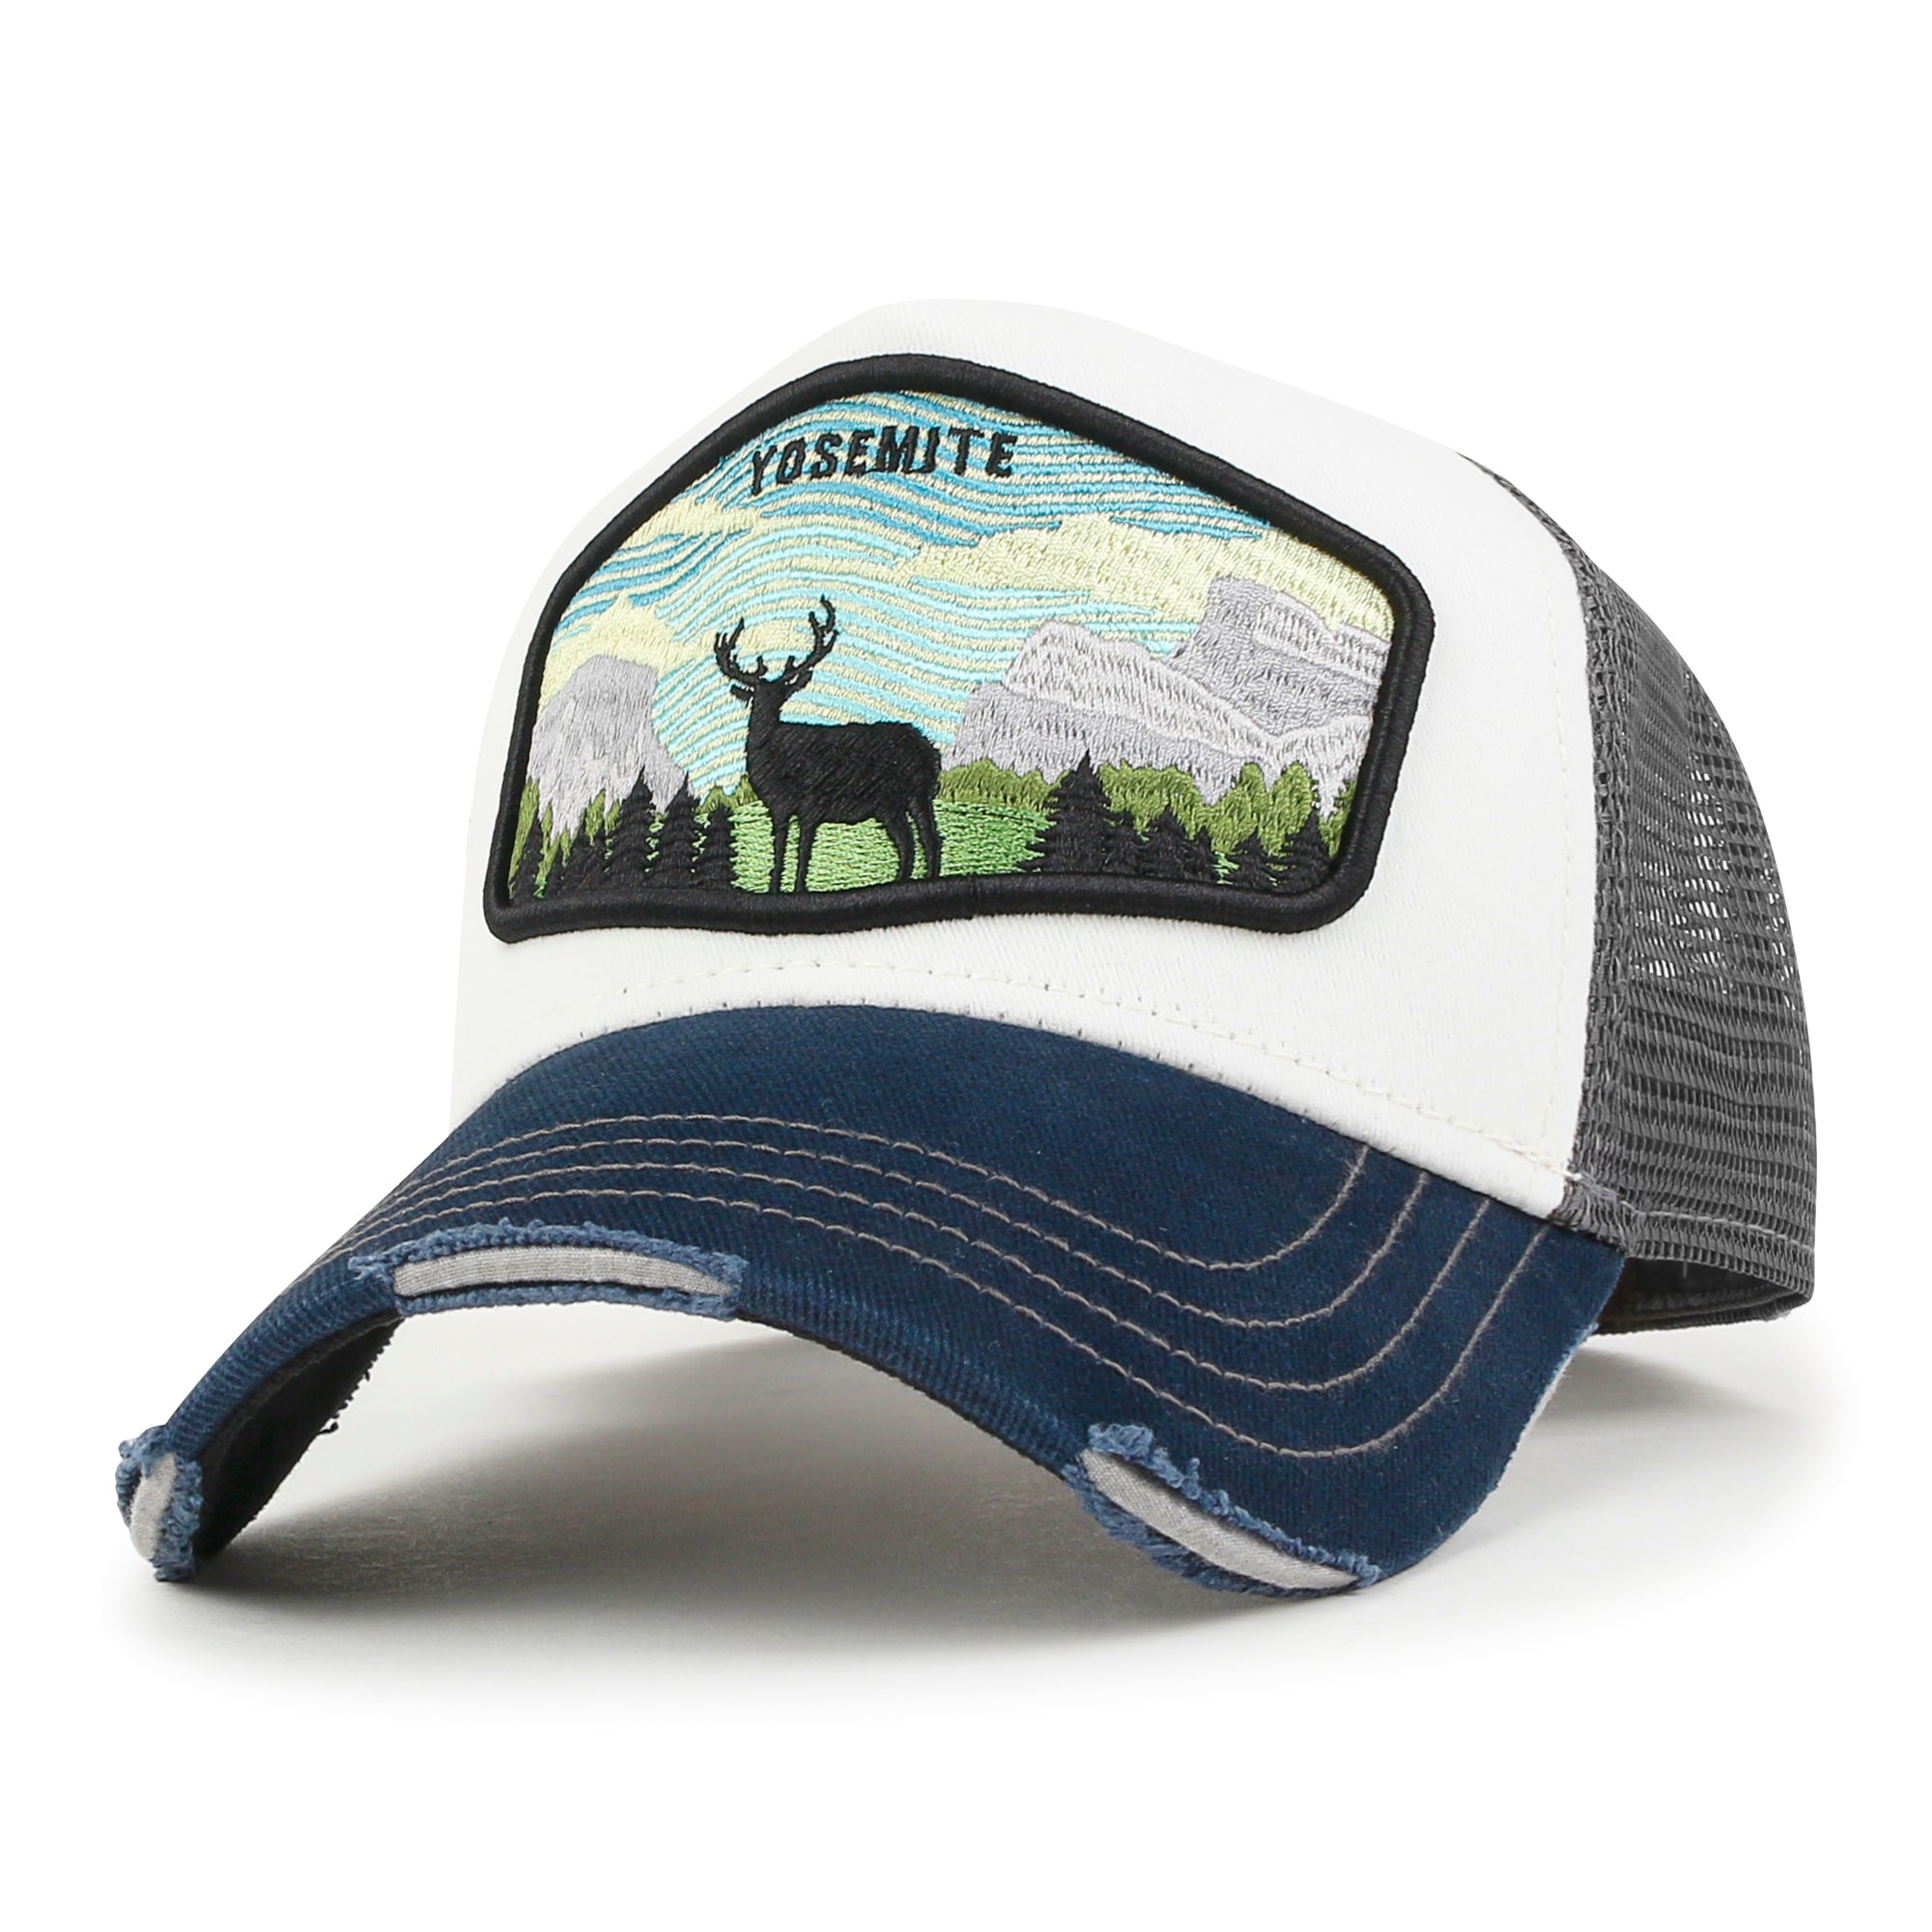 ililily Premium Yosemite Embroidery Baseball Tru Casual Structured Cap